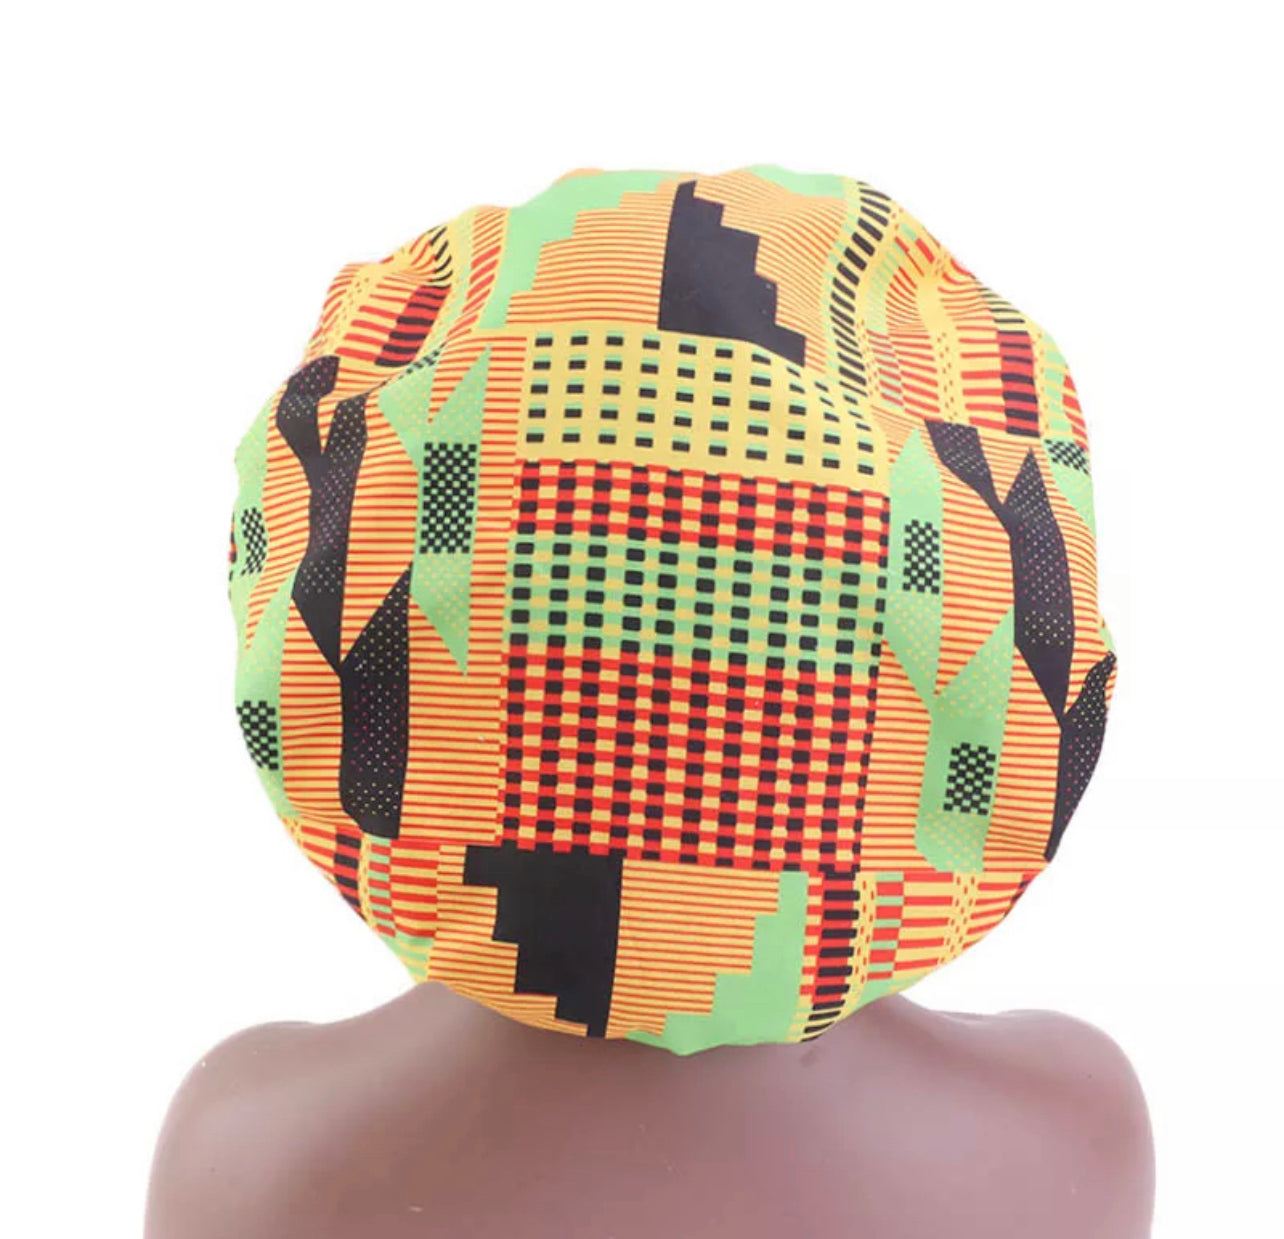 Satin Silk African Pattern Ankara Bonnet Caps